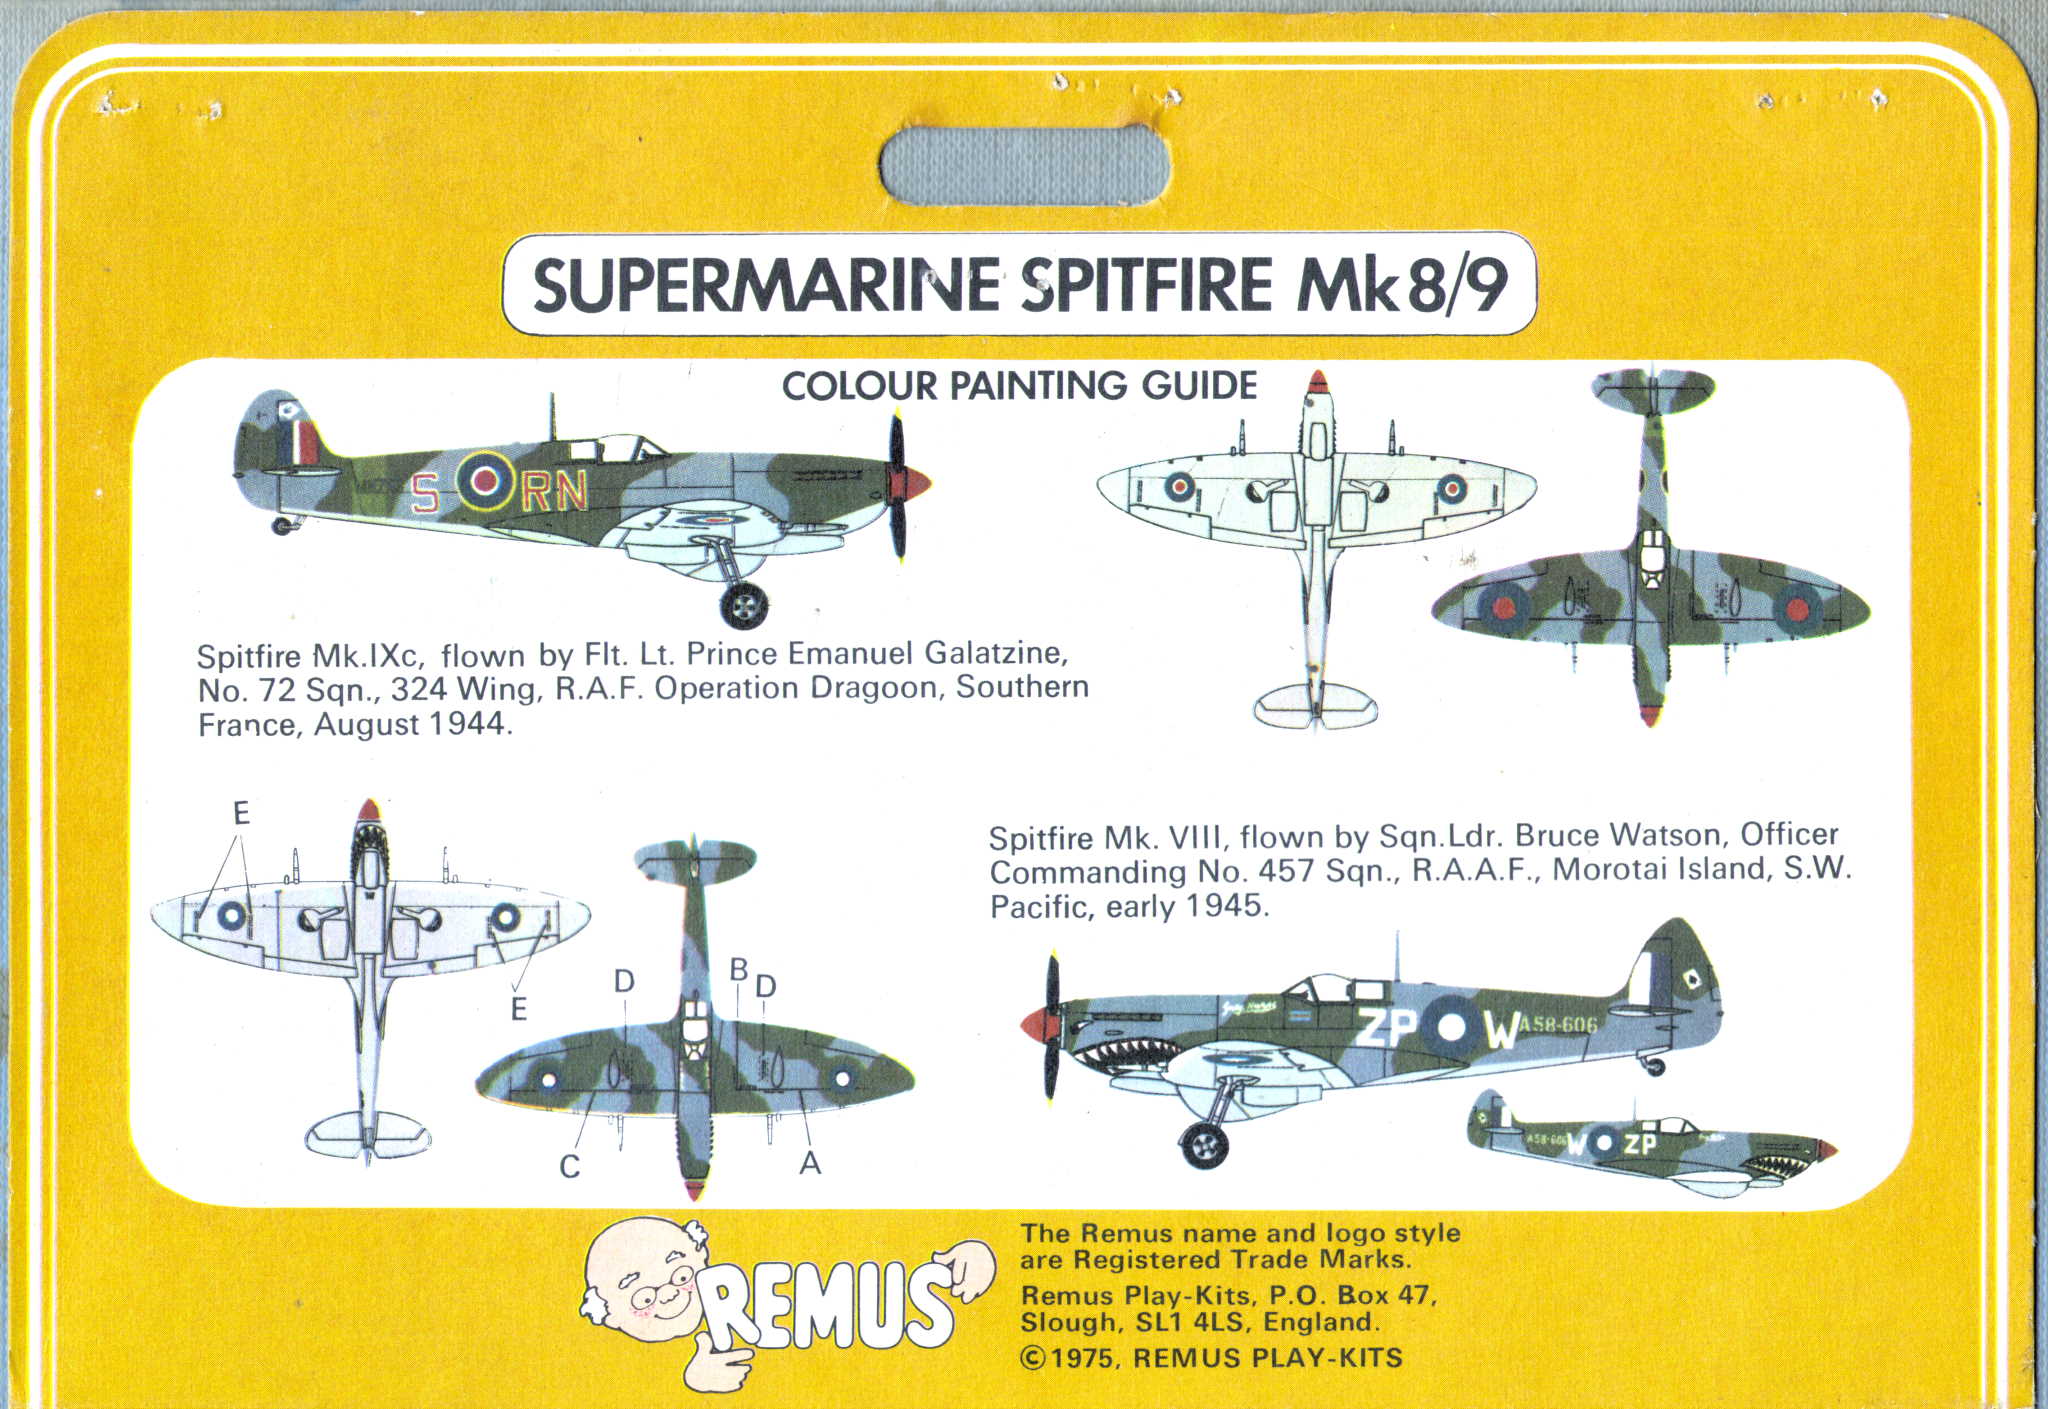 Remus 1016 Supermarine Spitfire Mk.8/9, Remus play-kits, 1975, схемы окраски и маркировки